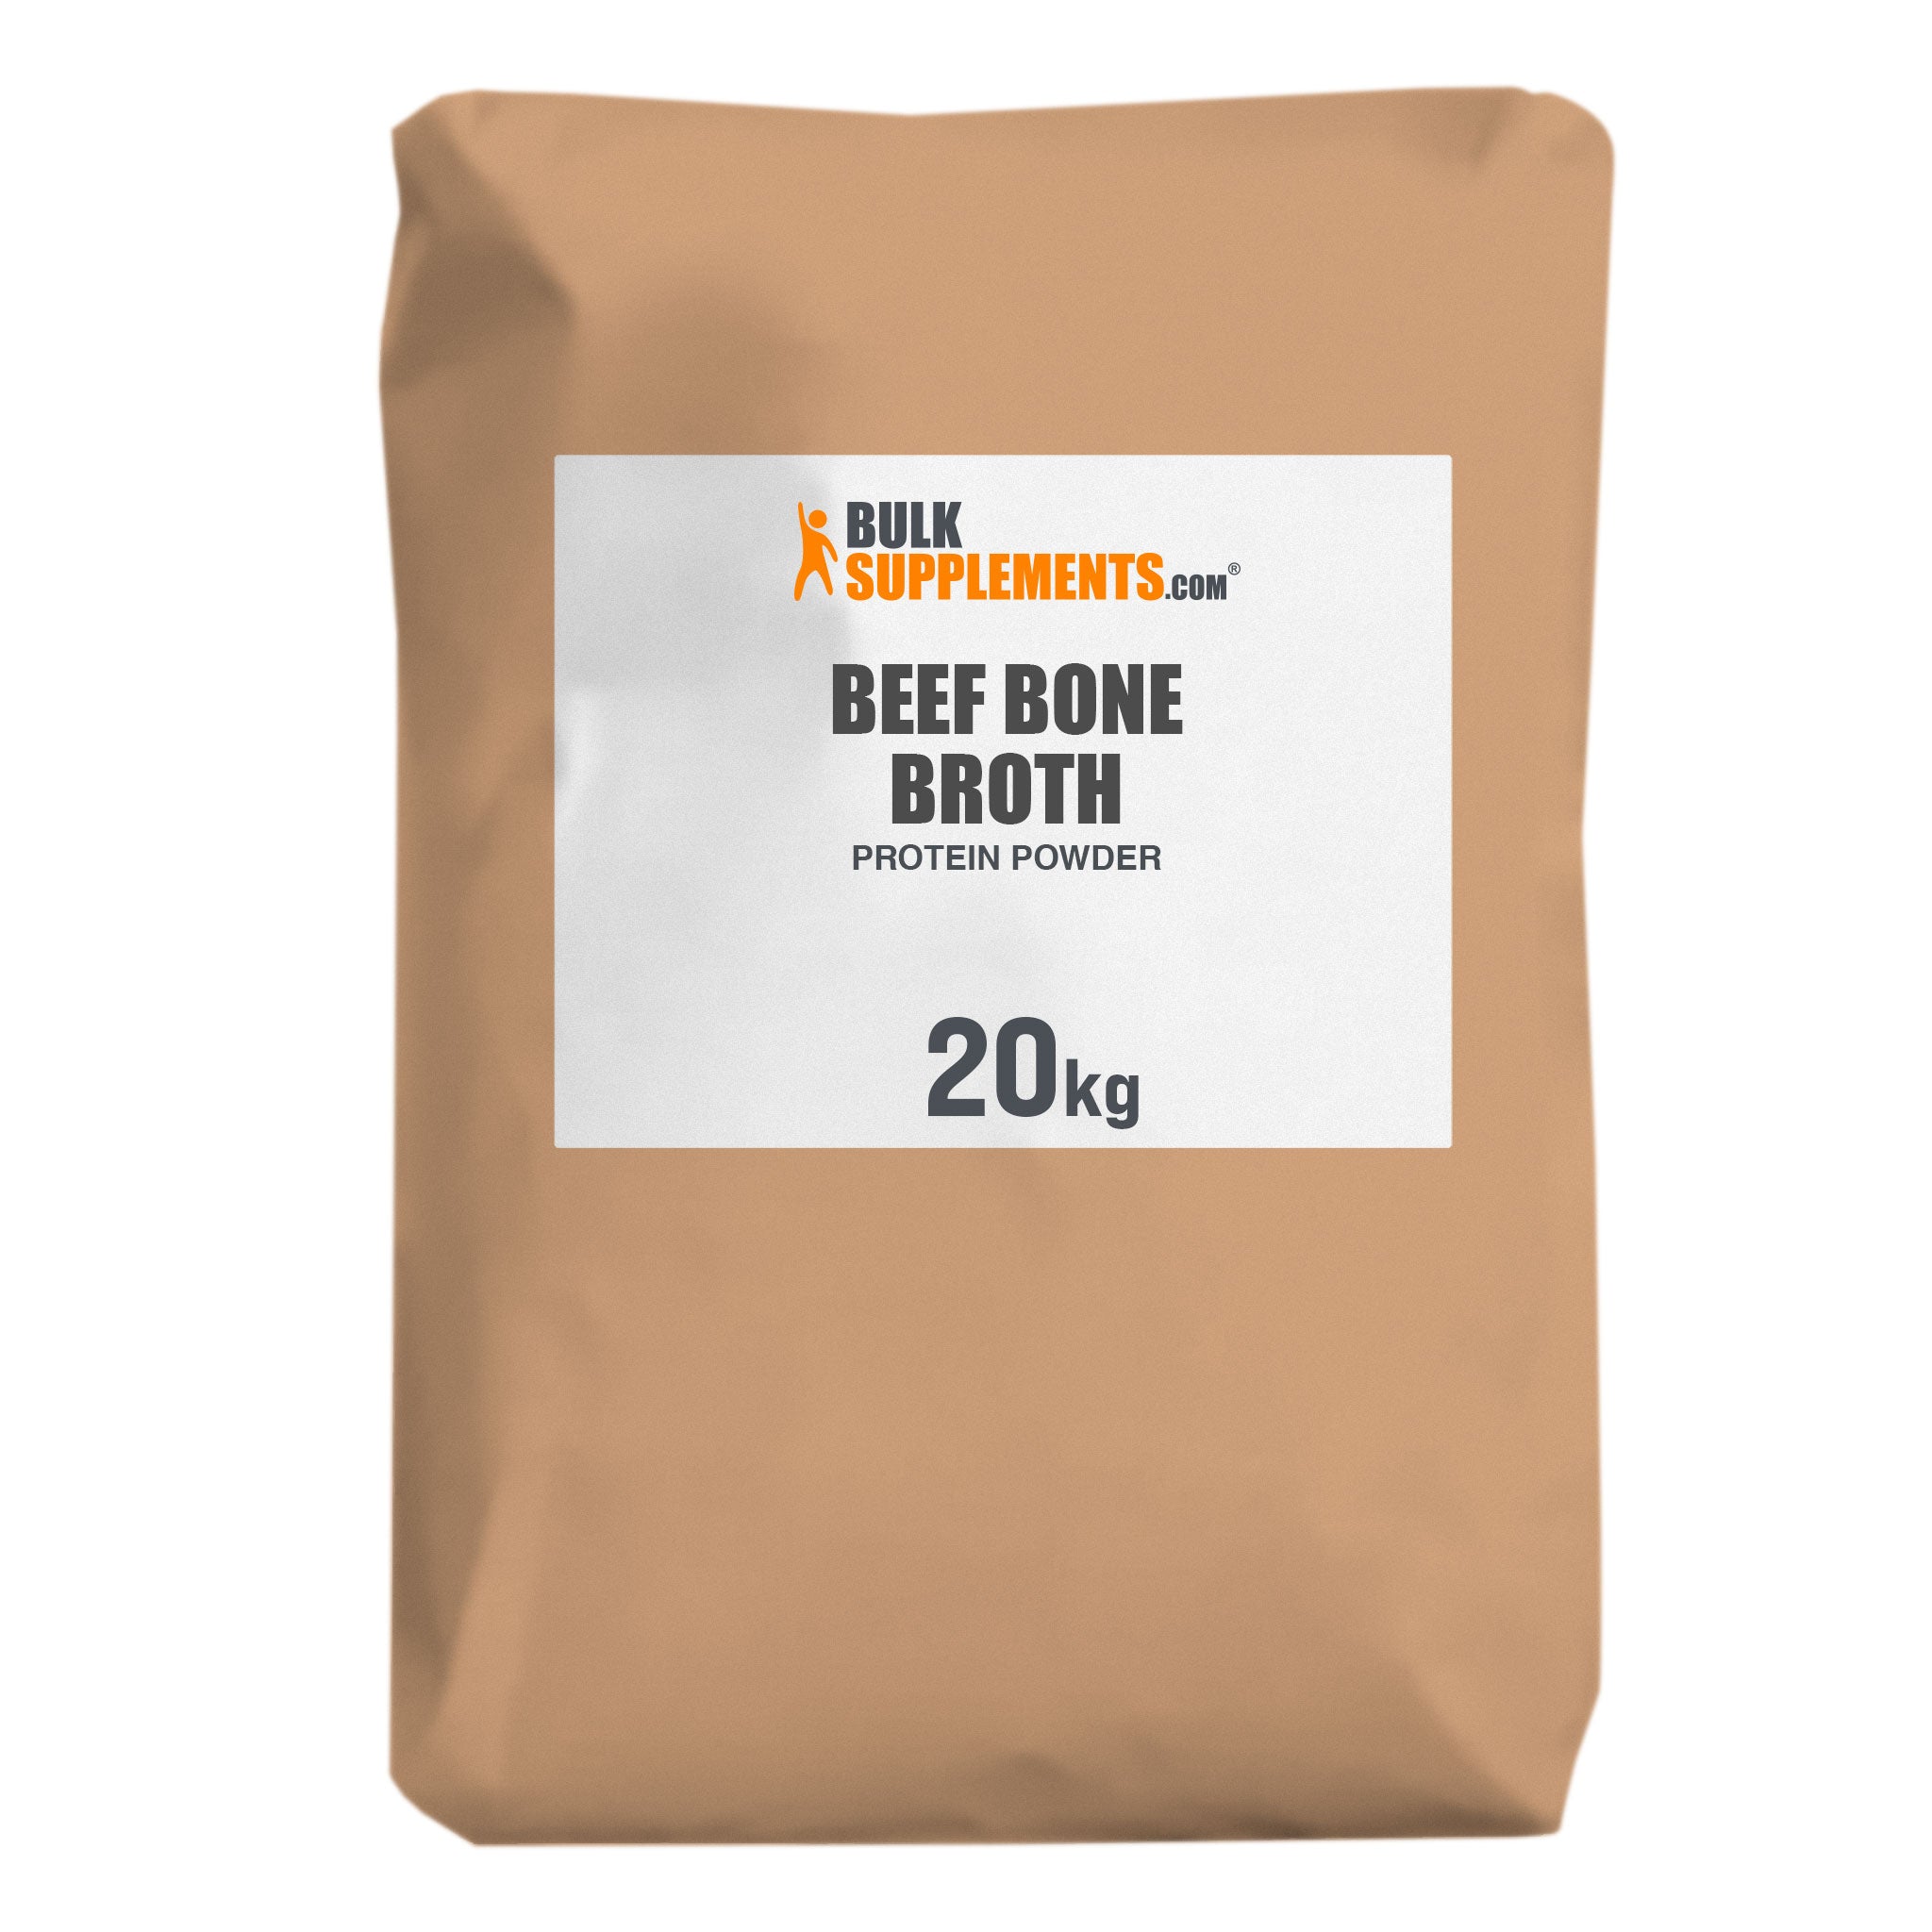 Beef Bone Broth Protein Powder Bulk, 20kg package